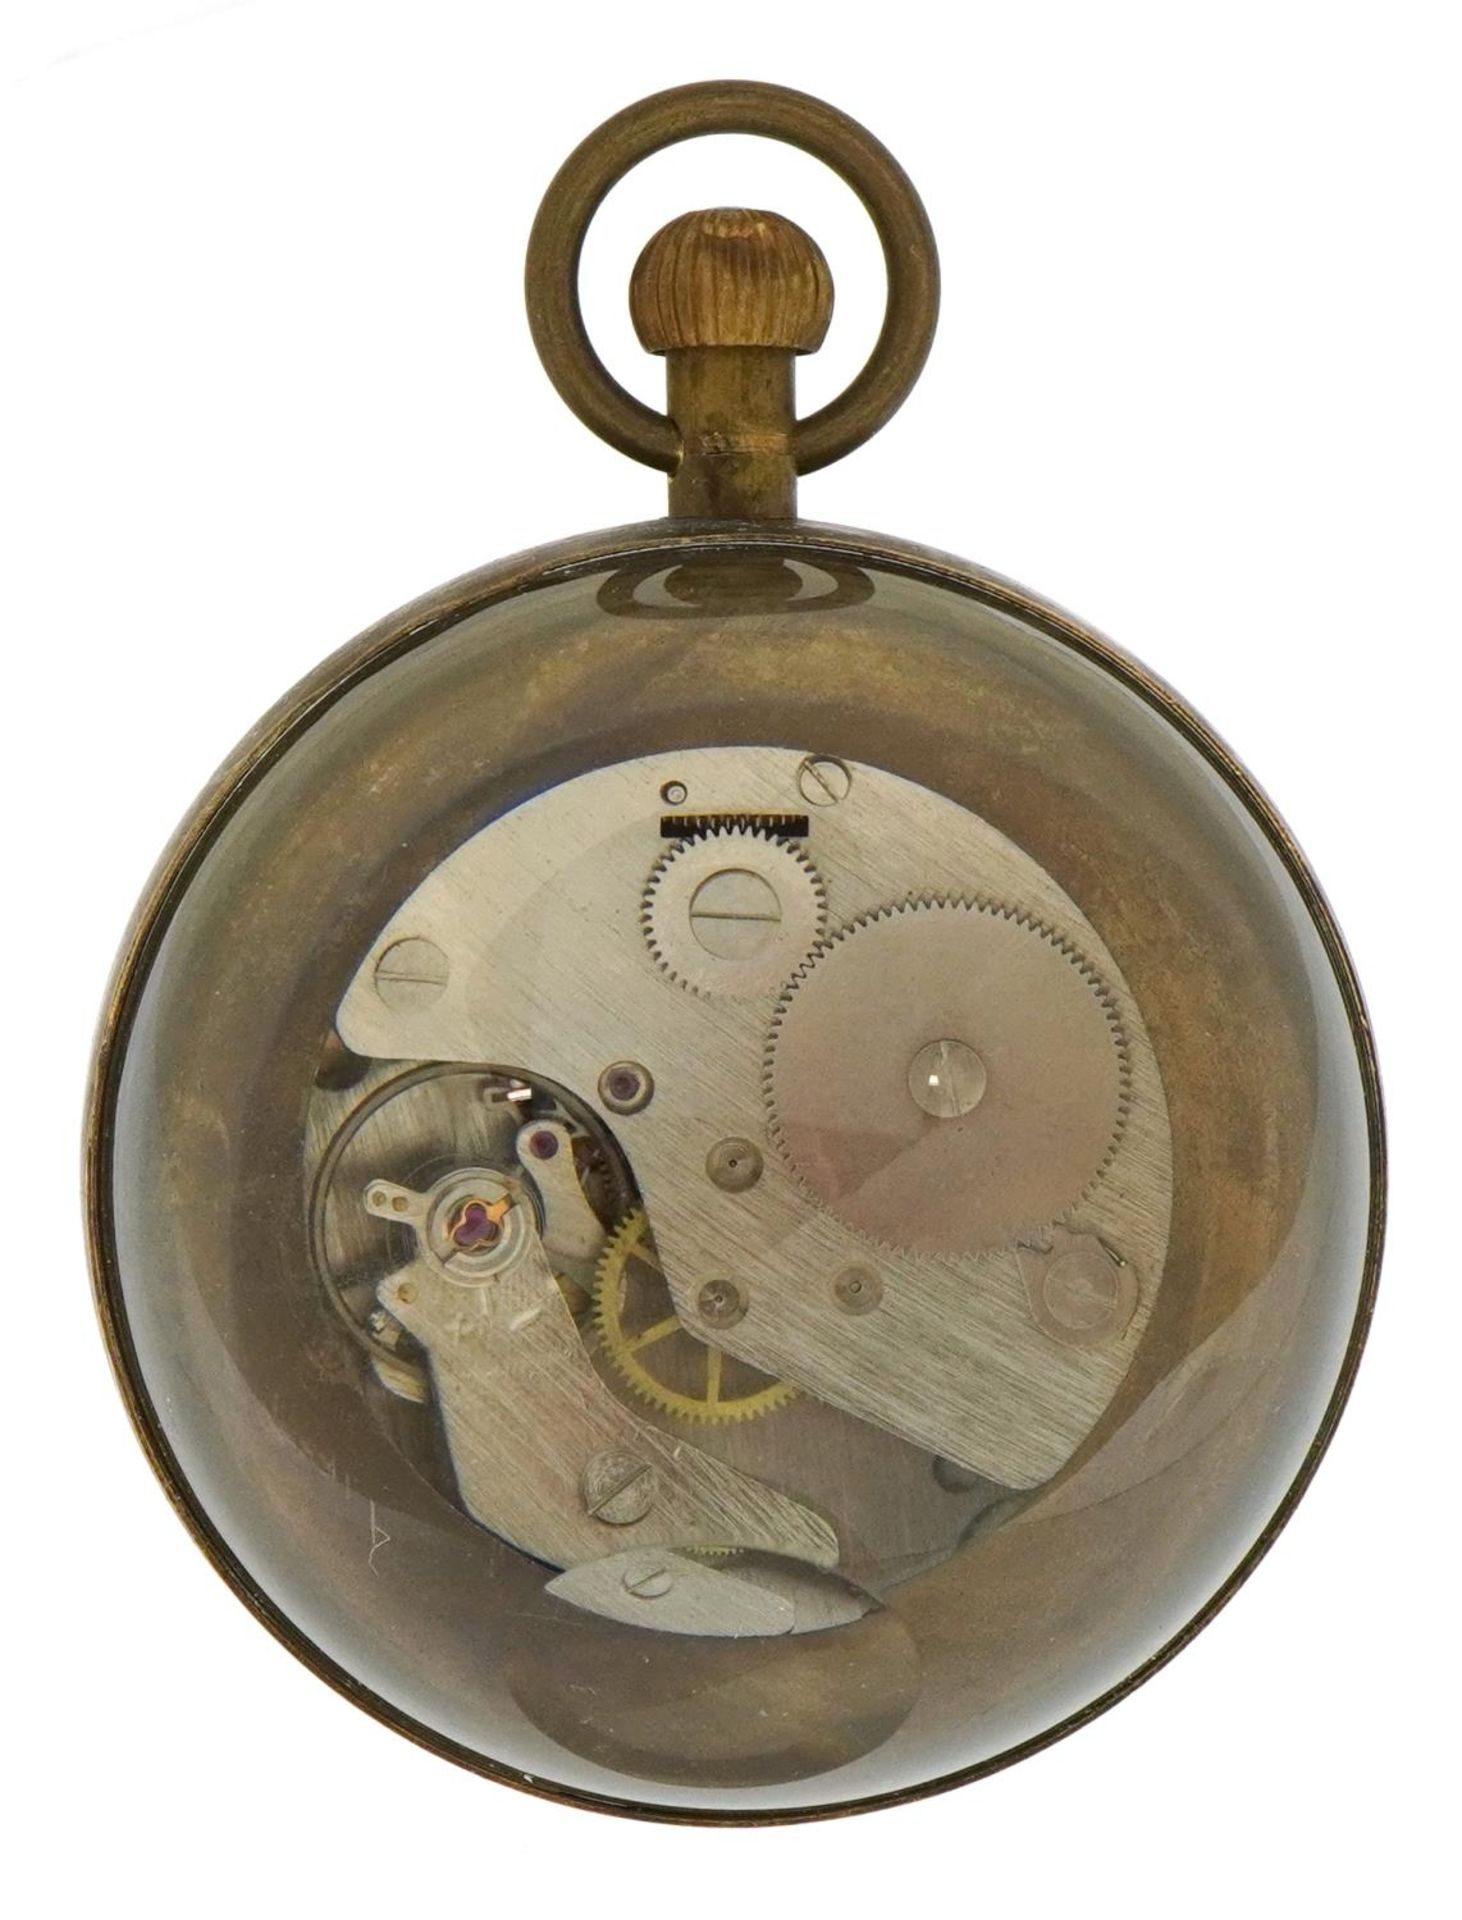 Globular brass desk clock, 6.5cm high - Image 2 of 2